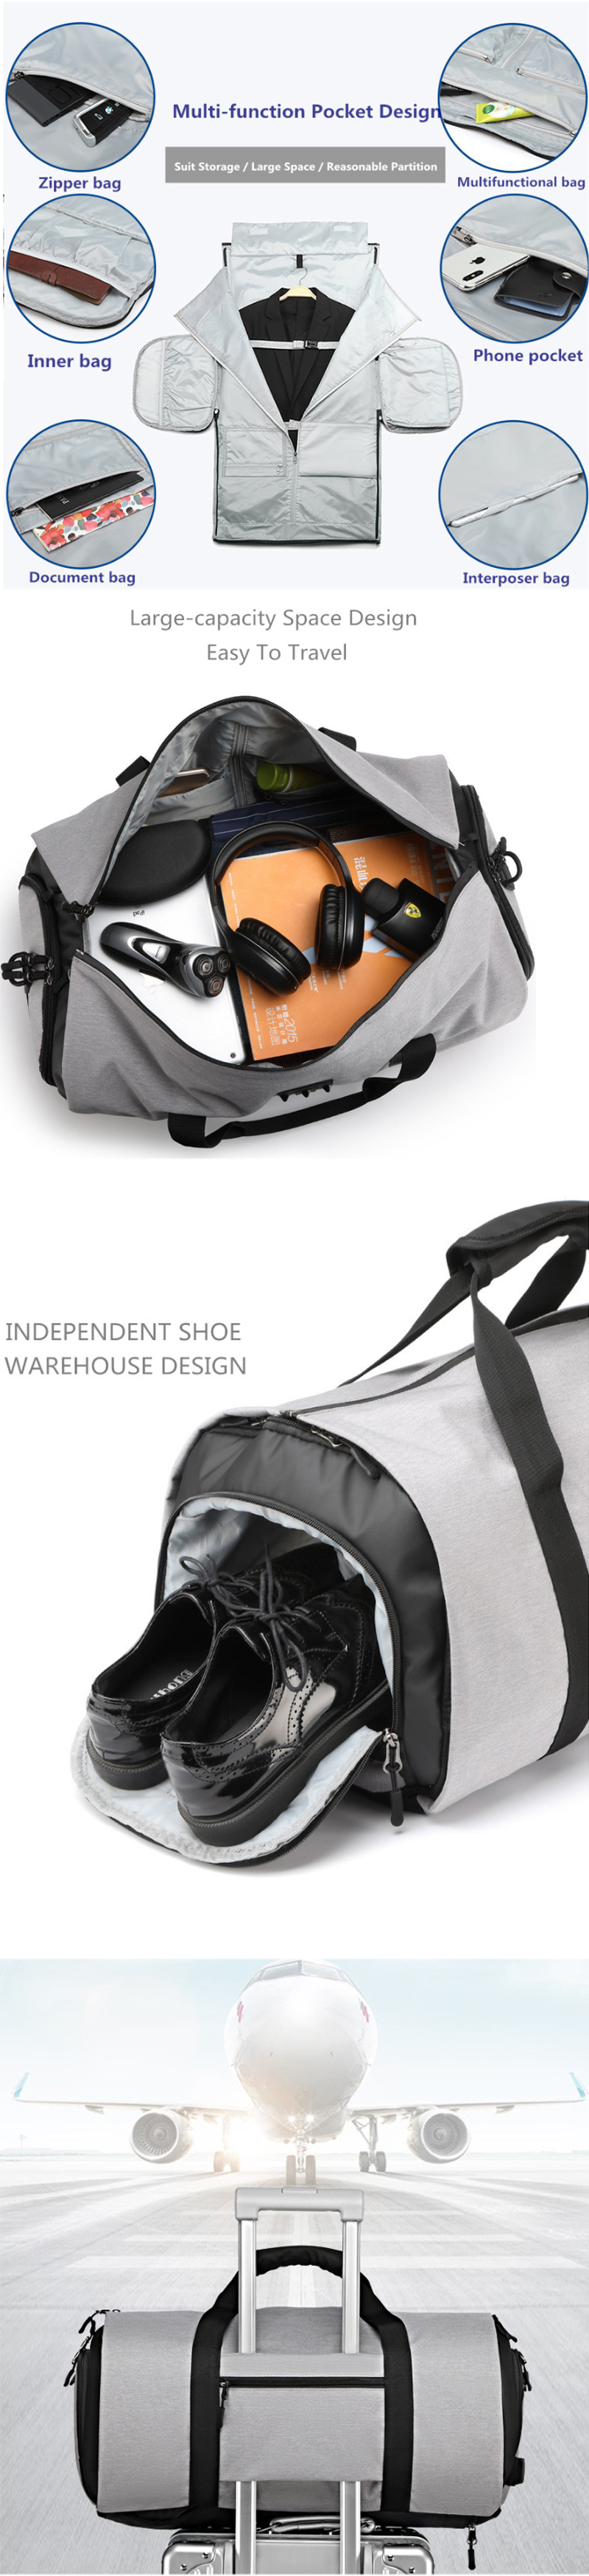 OZUKO-Travel-Luggage-Bag-Duffle-Bag-Suit-Storage-Bag-With-Shoes-Bag-1643874-2